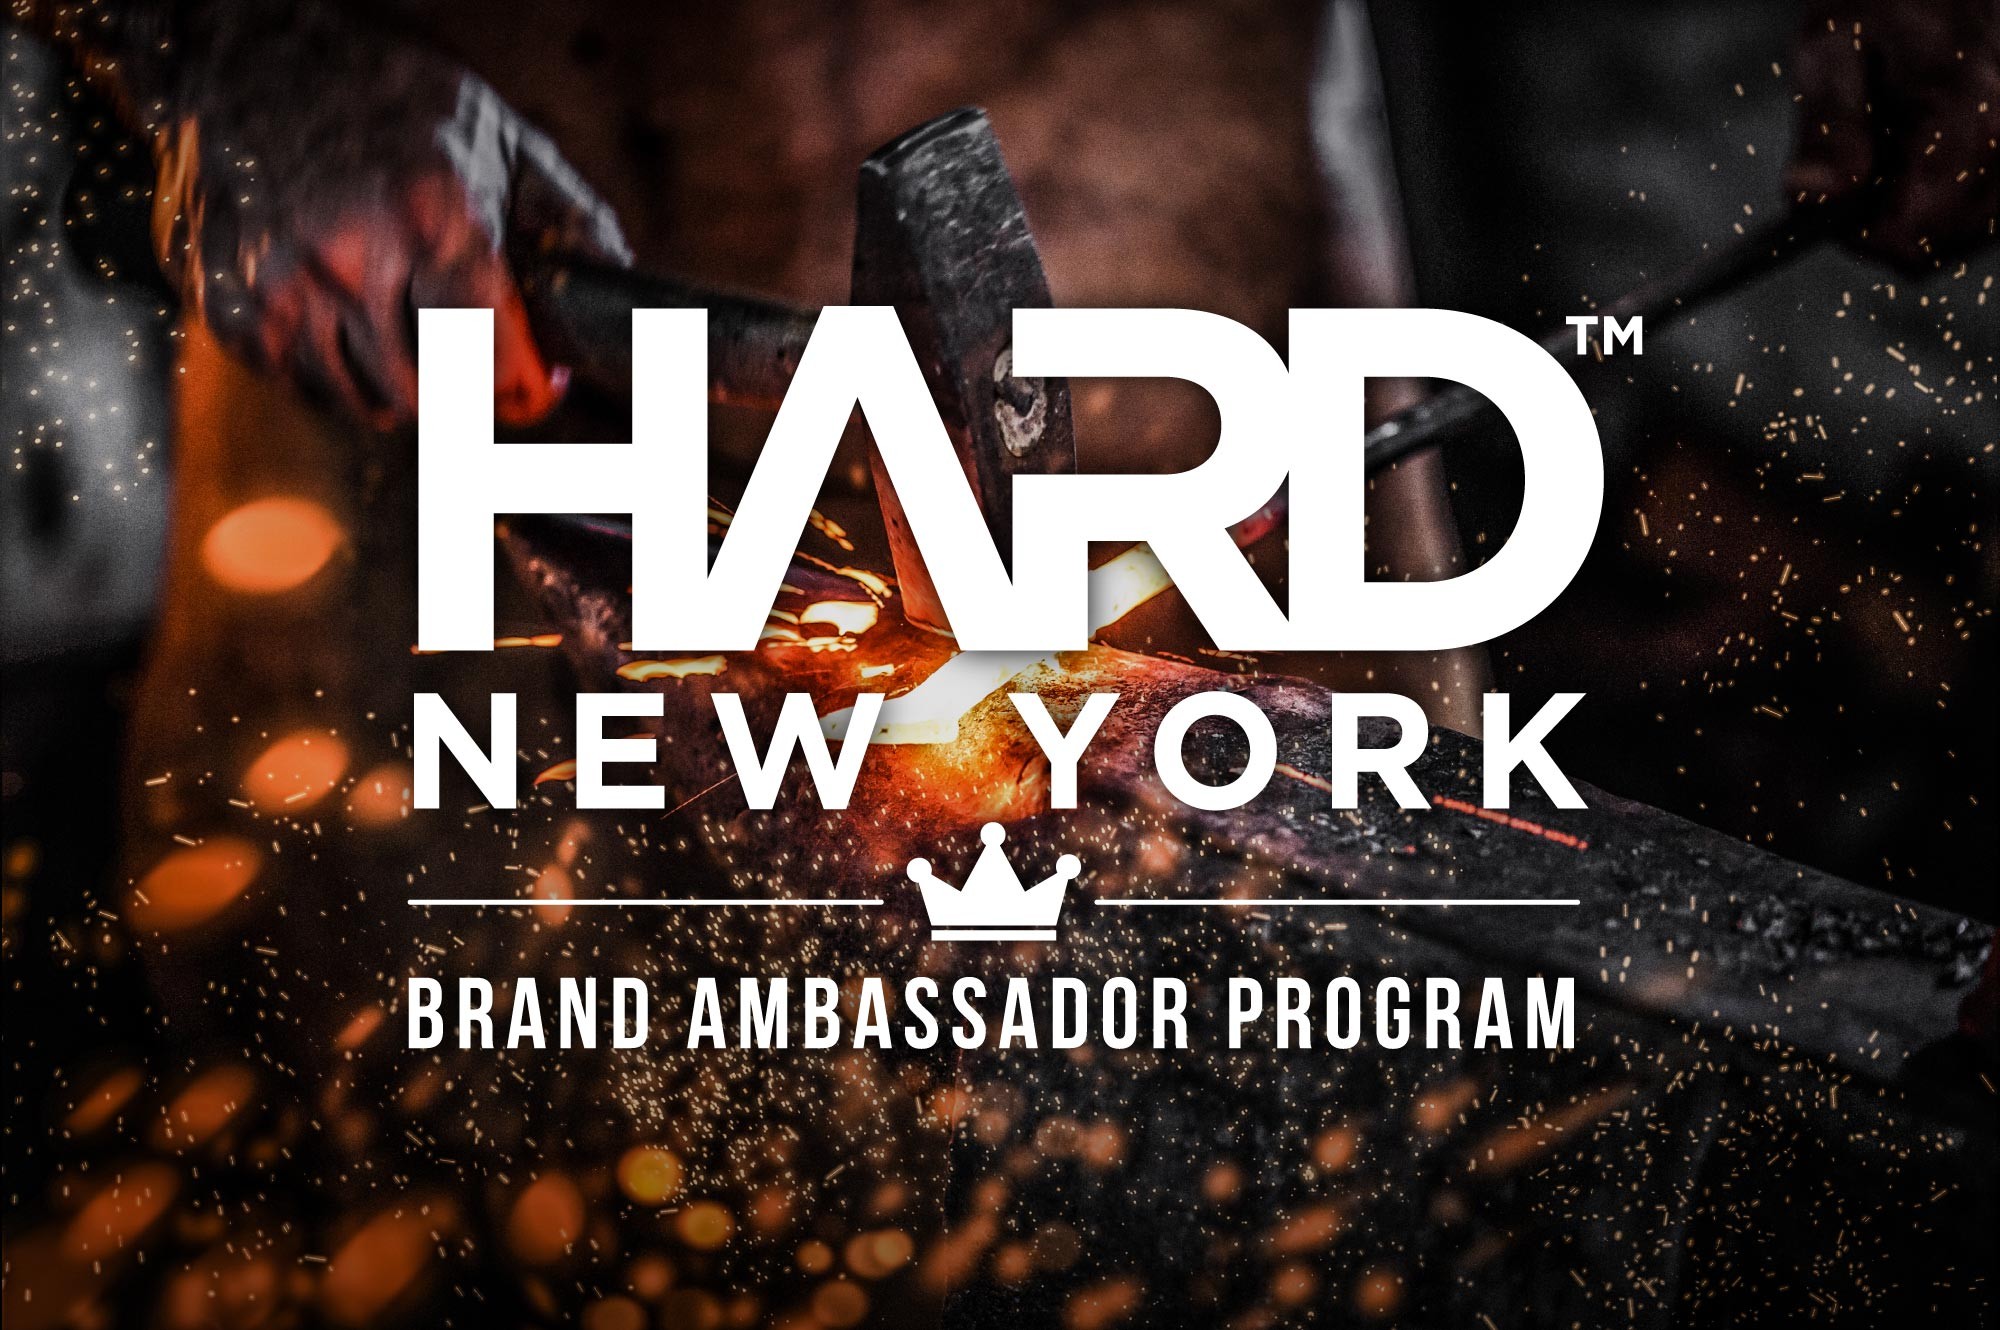 Brand Ambassador Opportunity with HARD NEW YORK